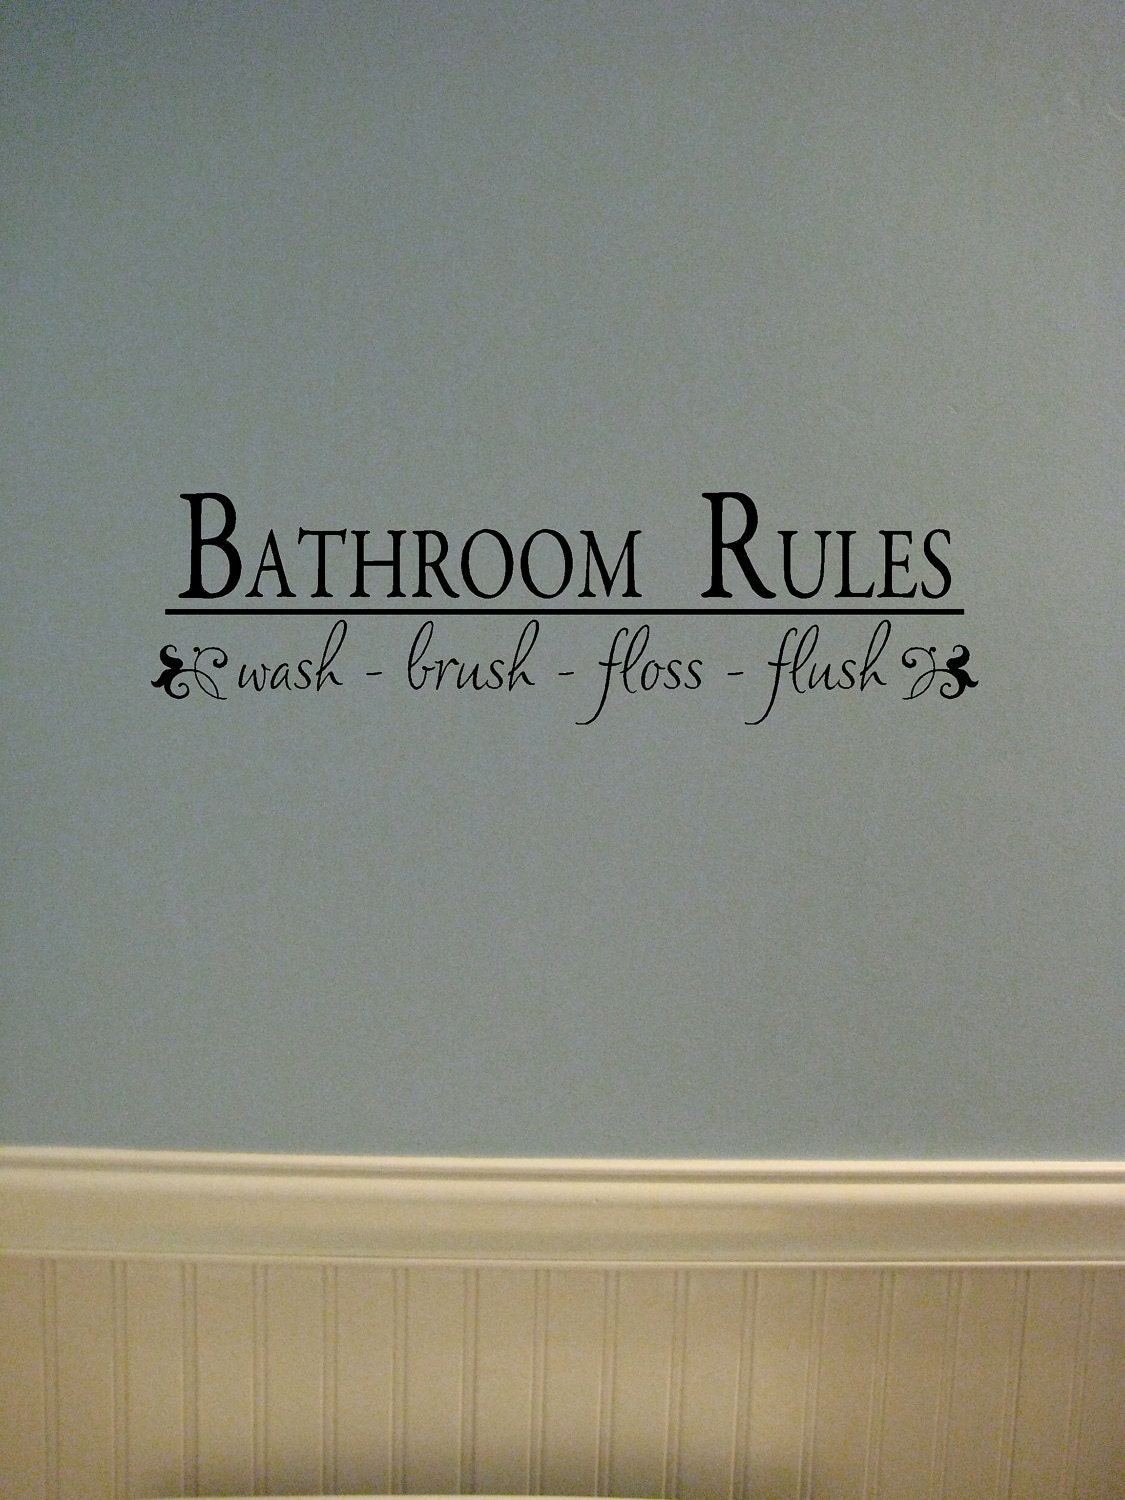 vinyl-lettering-bathroom-rules-by-orangeblossomshopaz-on-etsy